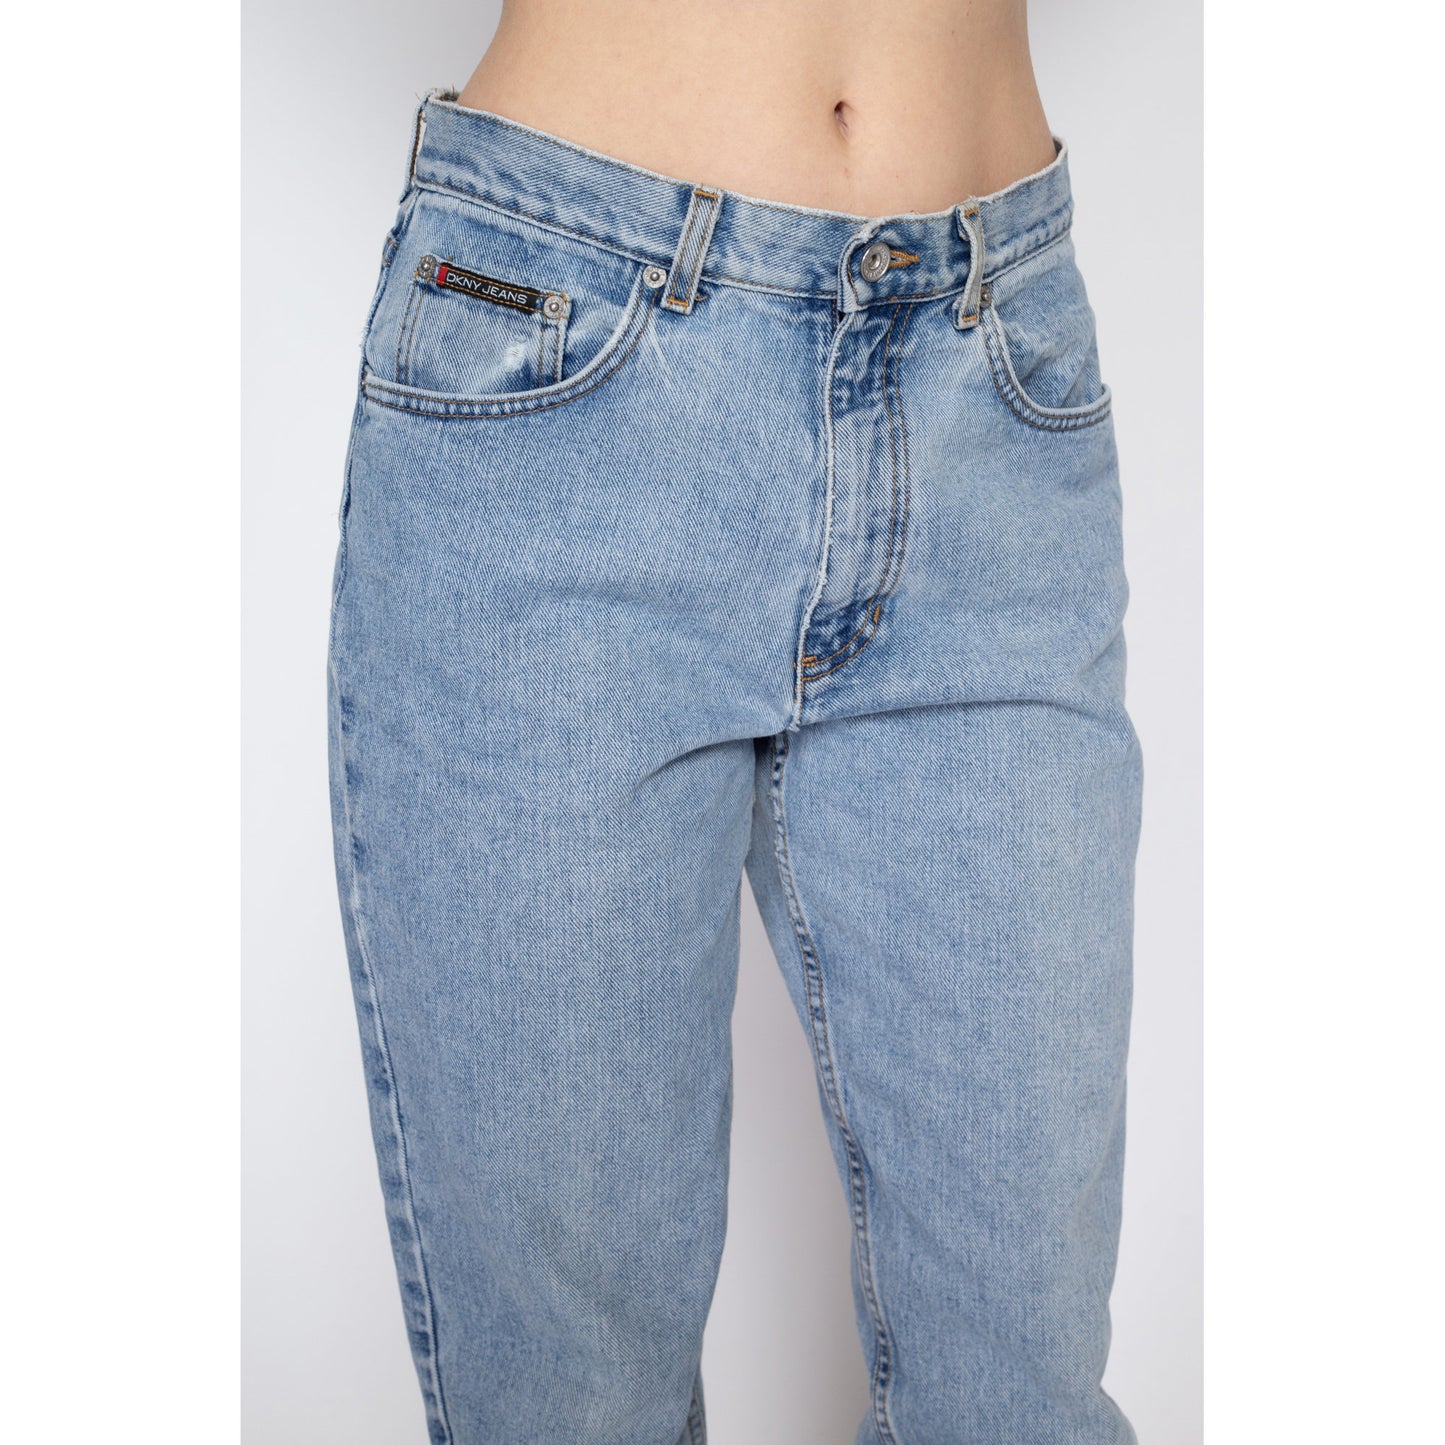 Large 90s DKNY High Waisted Mom Jeans 31" | Vintage Light Wash Denim Tapered Leg Jeans